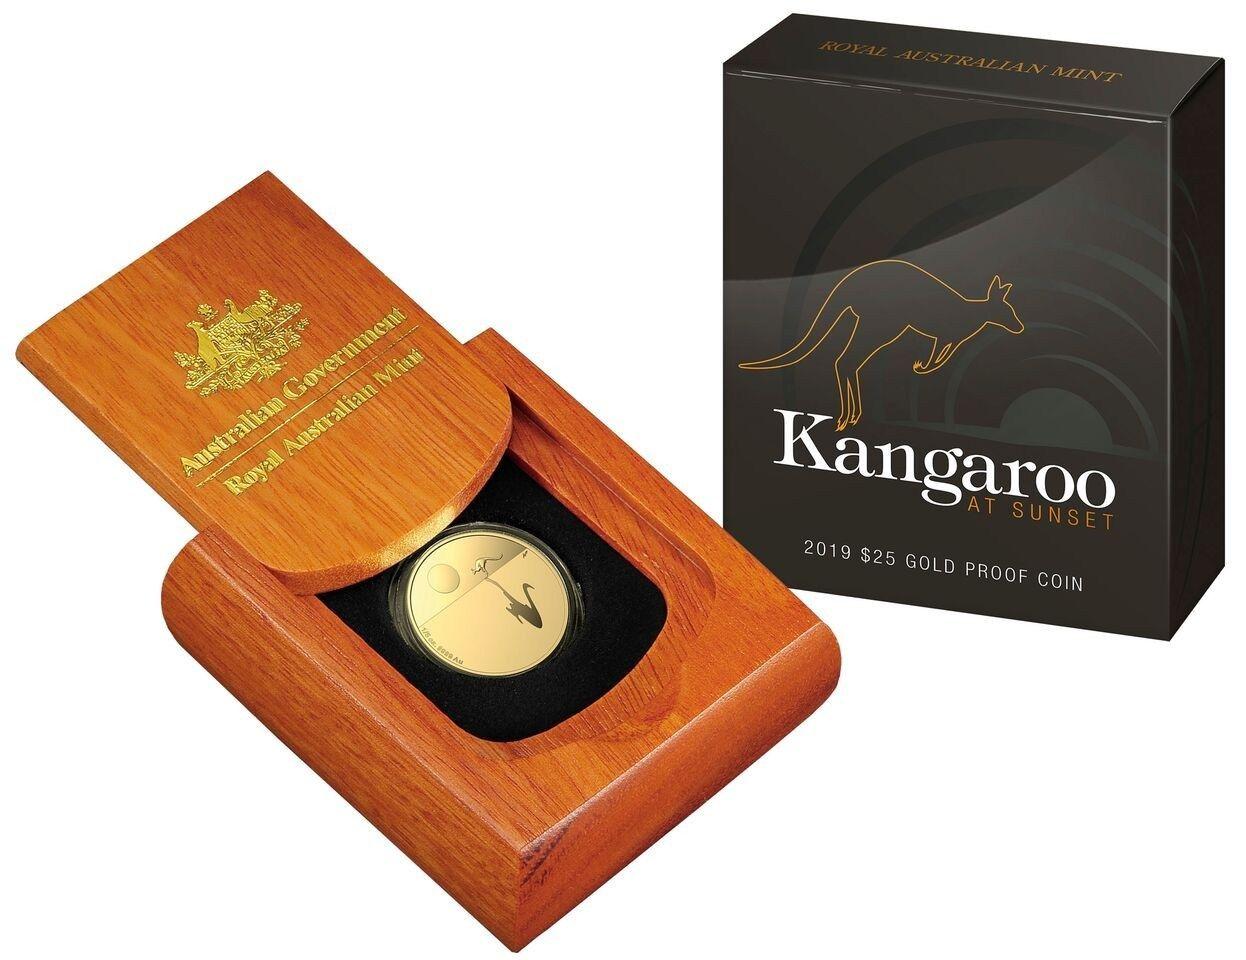 Kangaroo and Sun Logo - Australia: Sun Sets On The Golden Kangaroo Fifth Ounce Coin